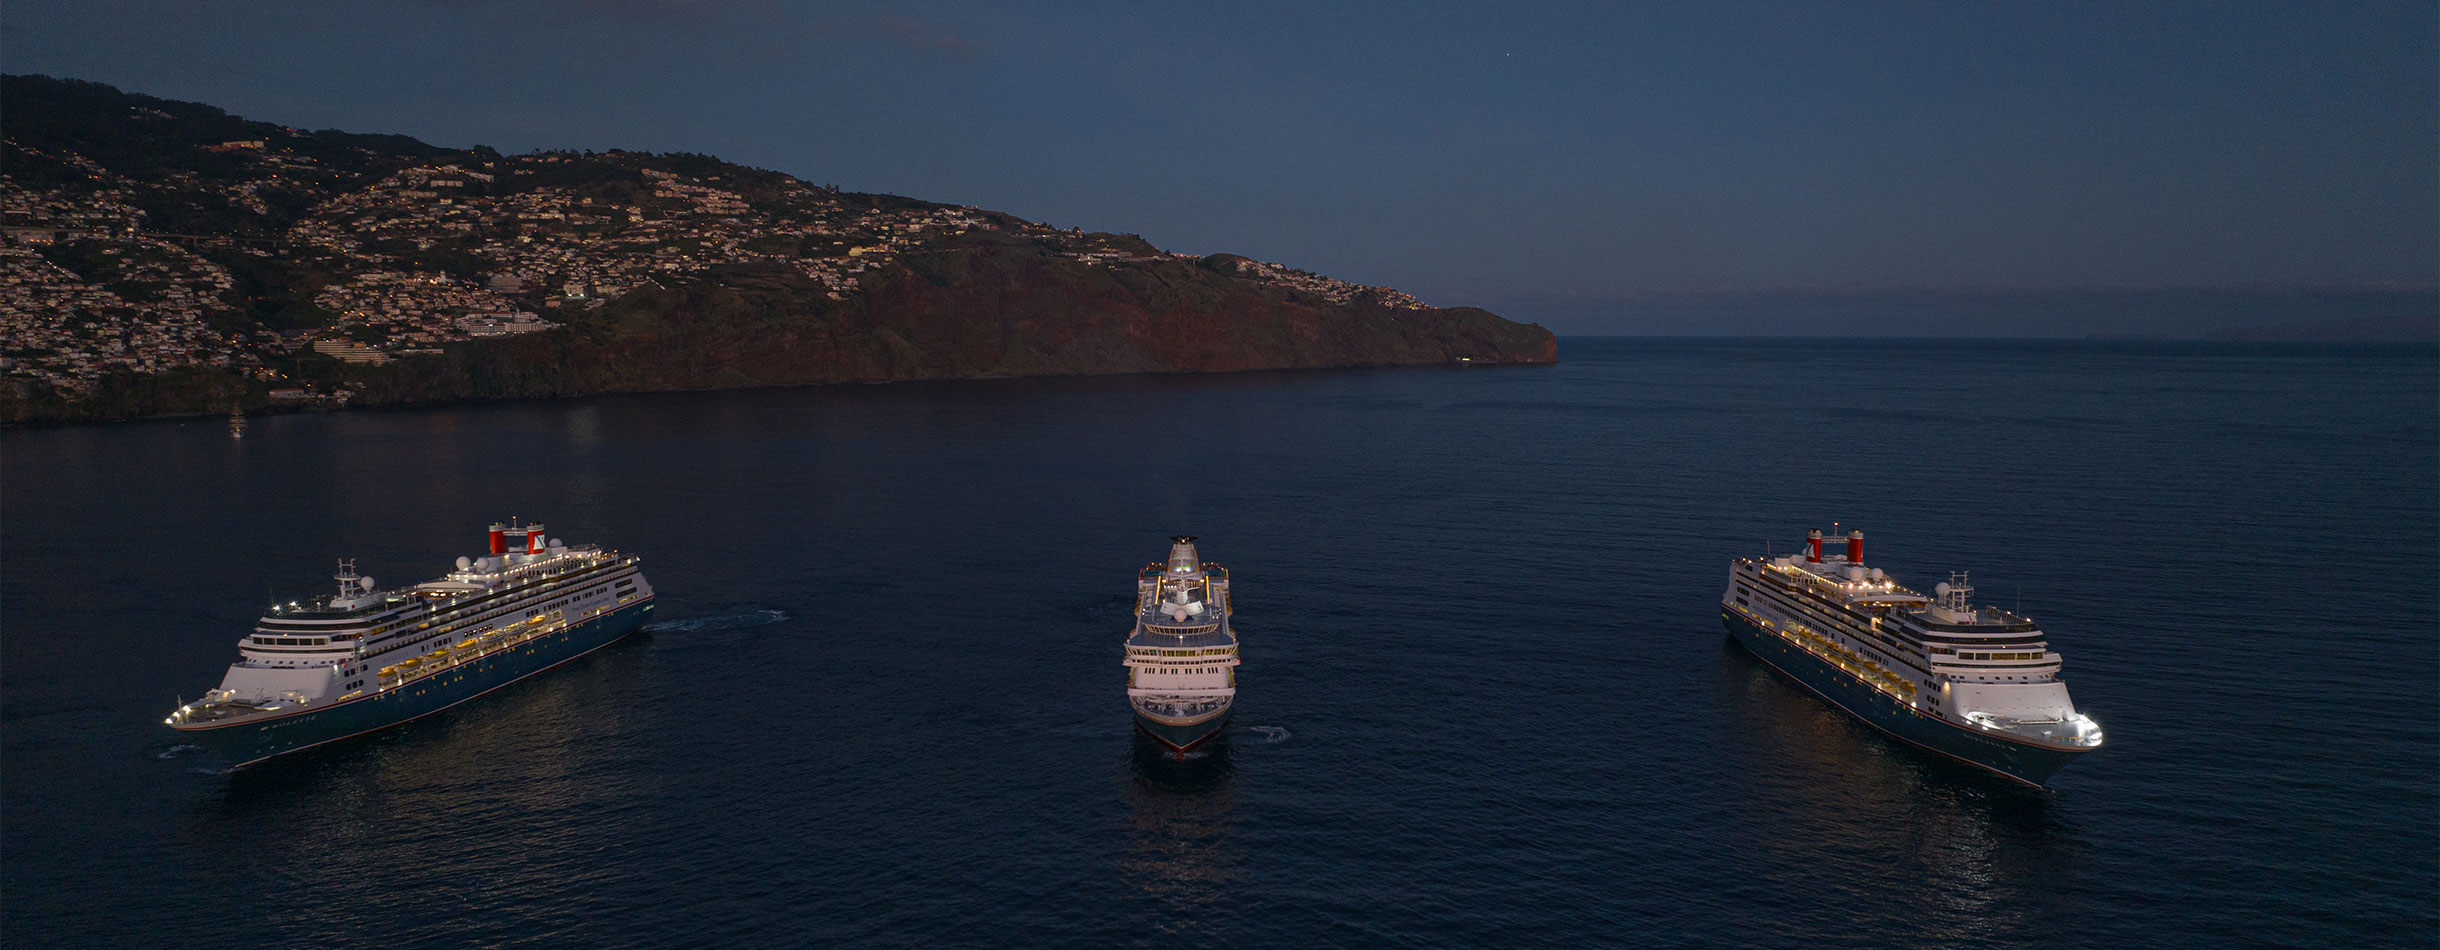 3 ships in Funchal